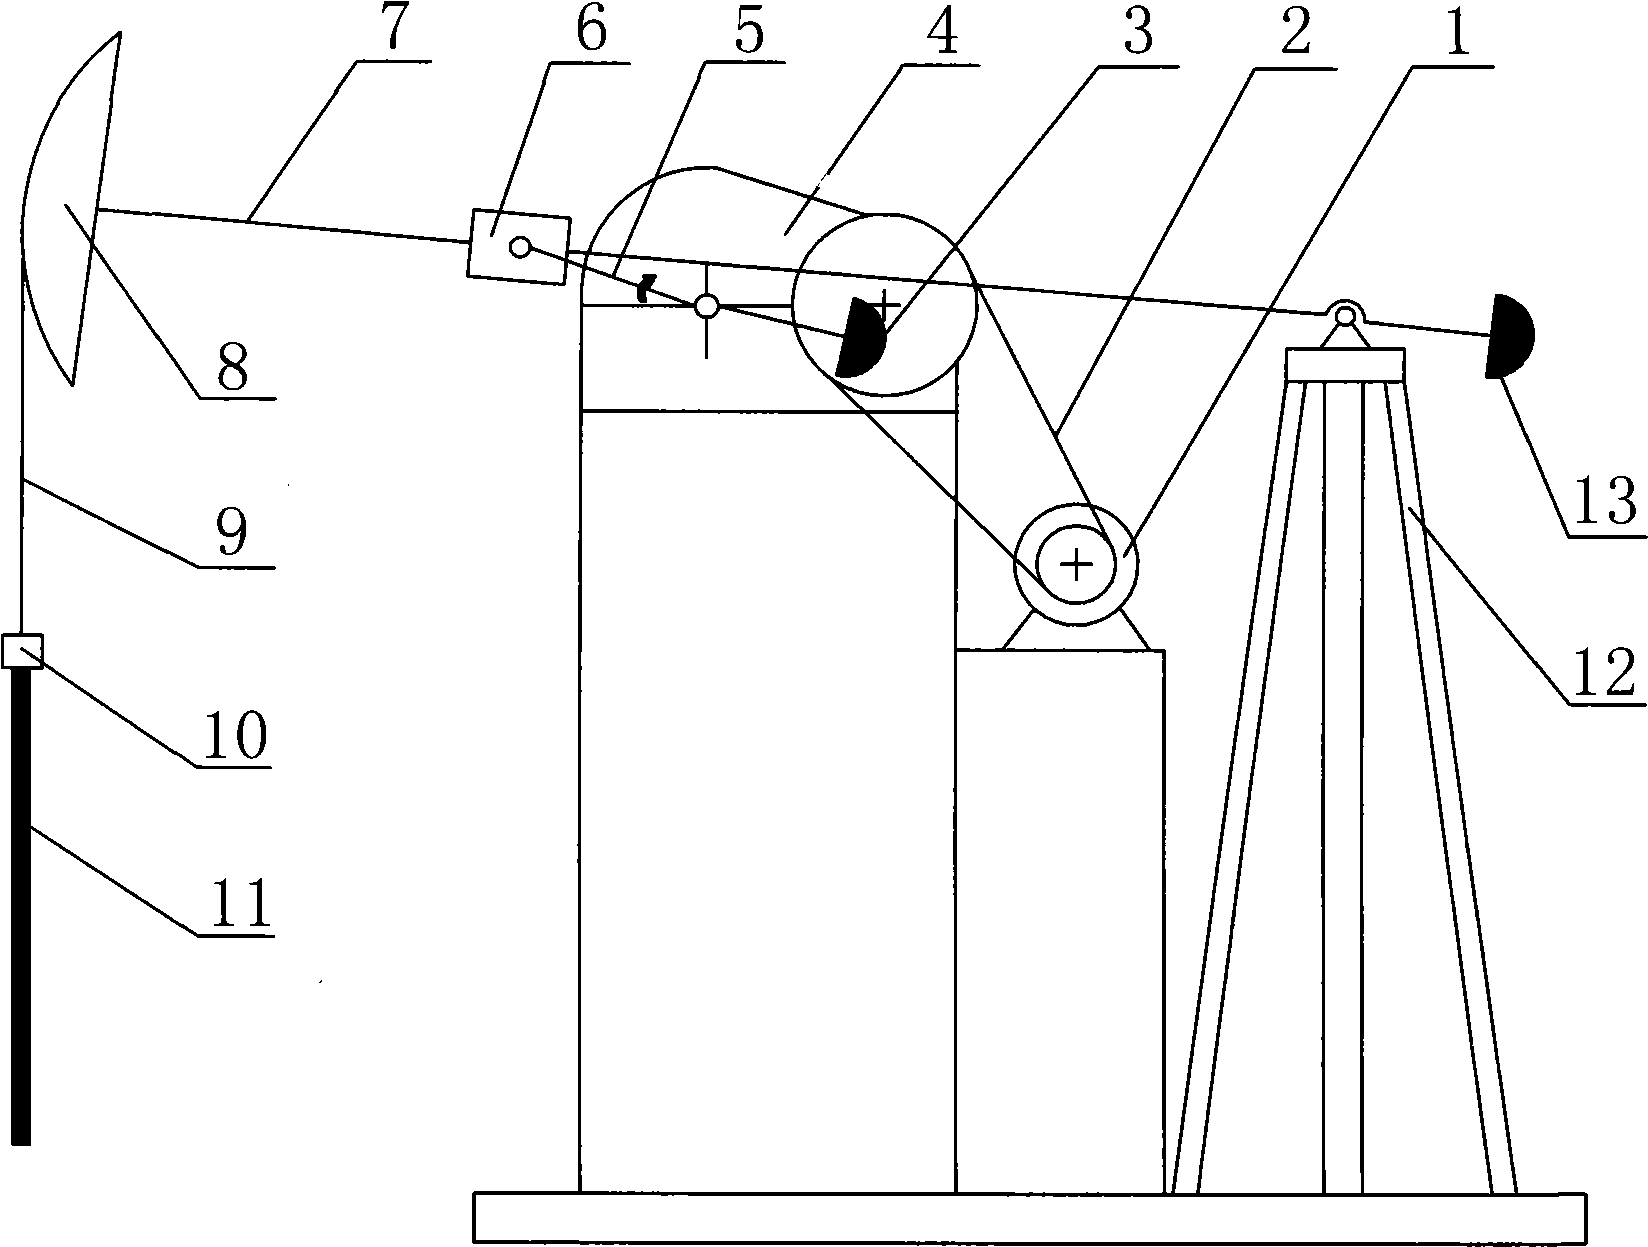 Pendulum guide rod type pumping unit